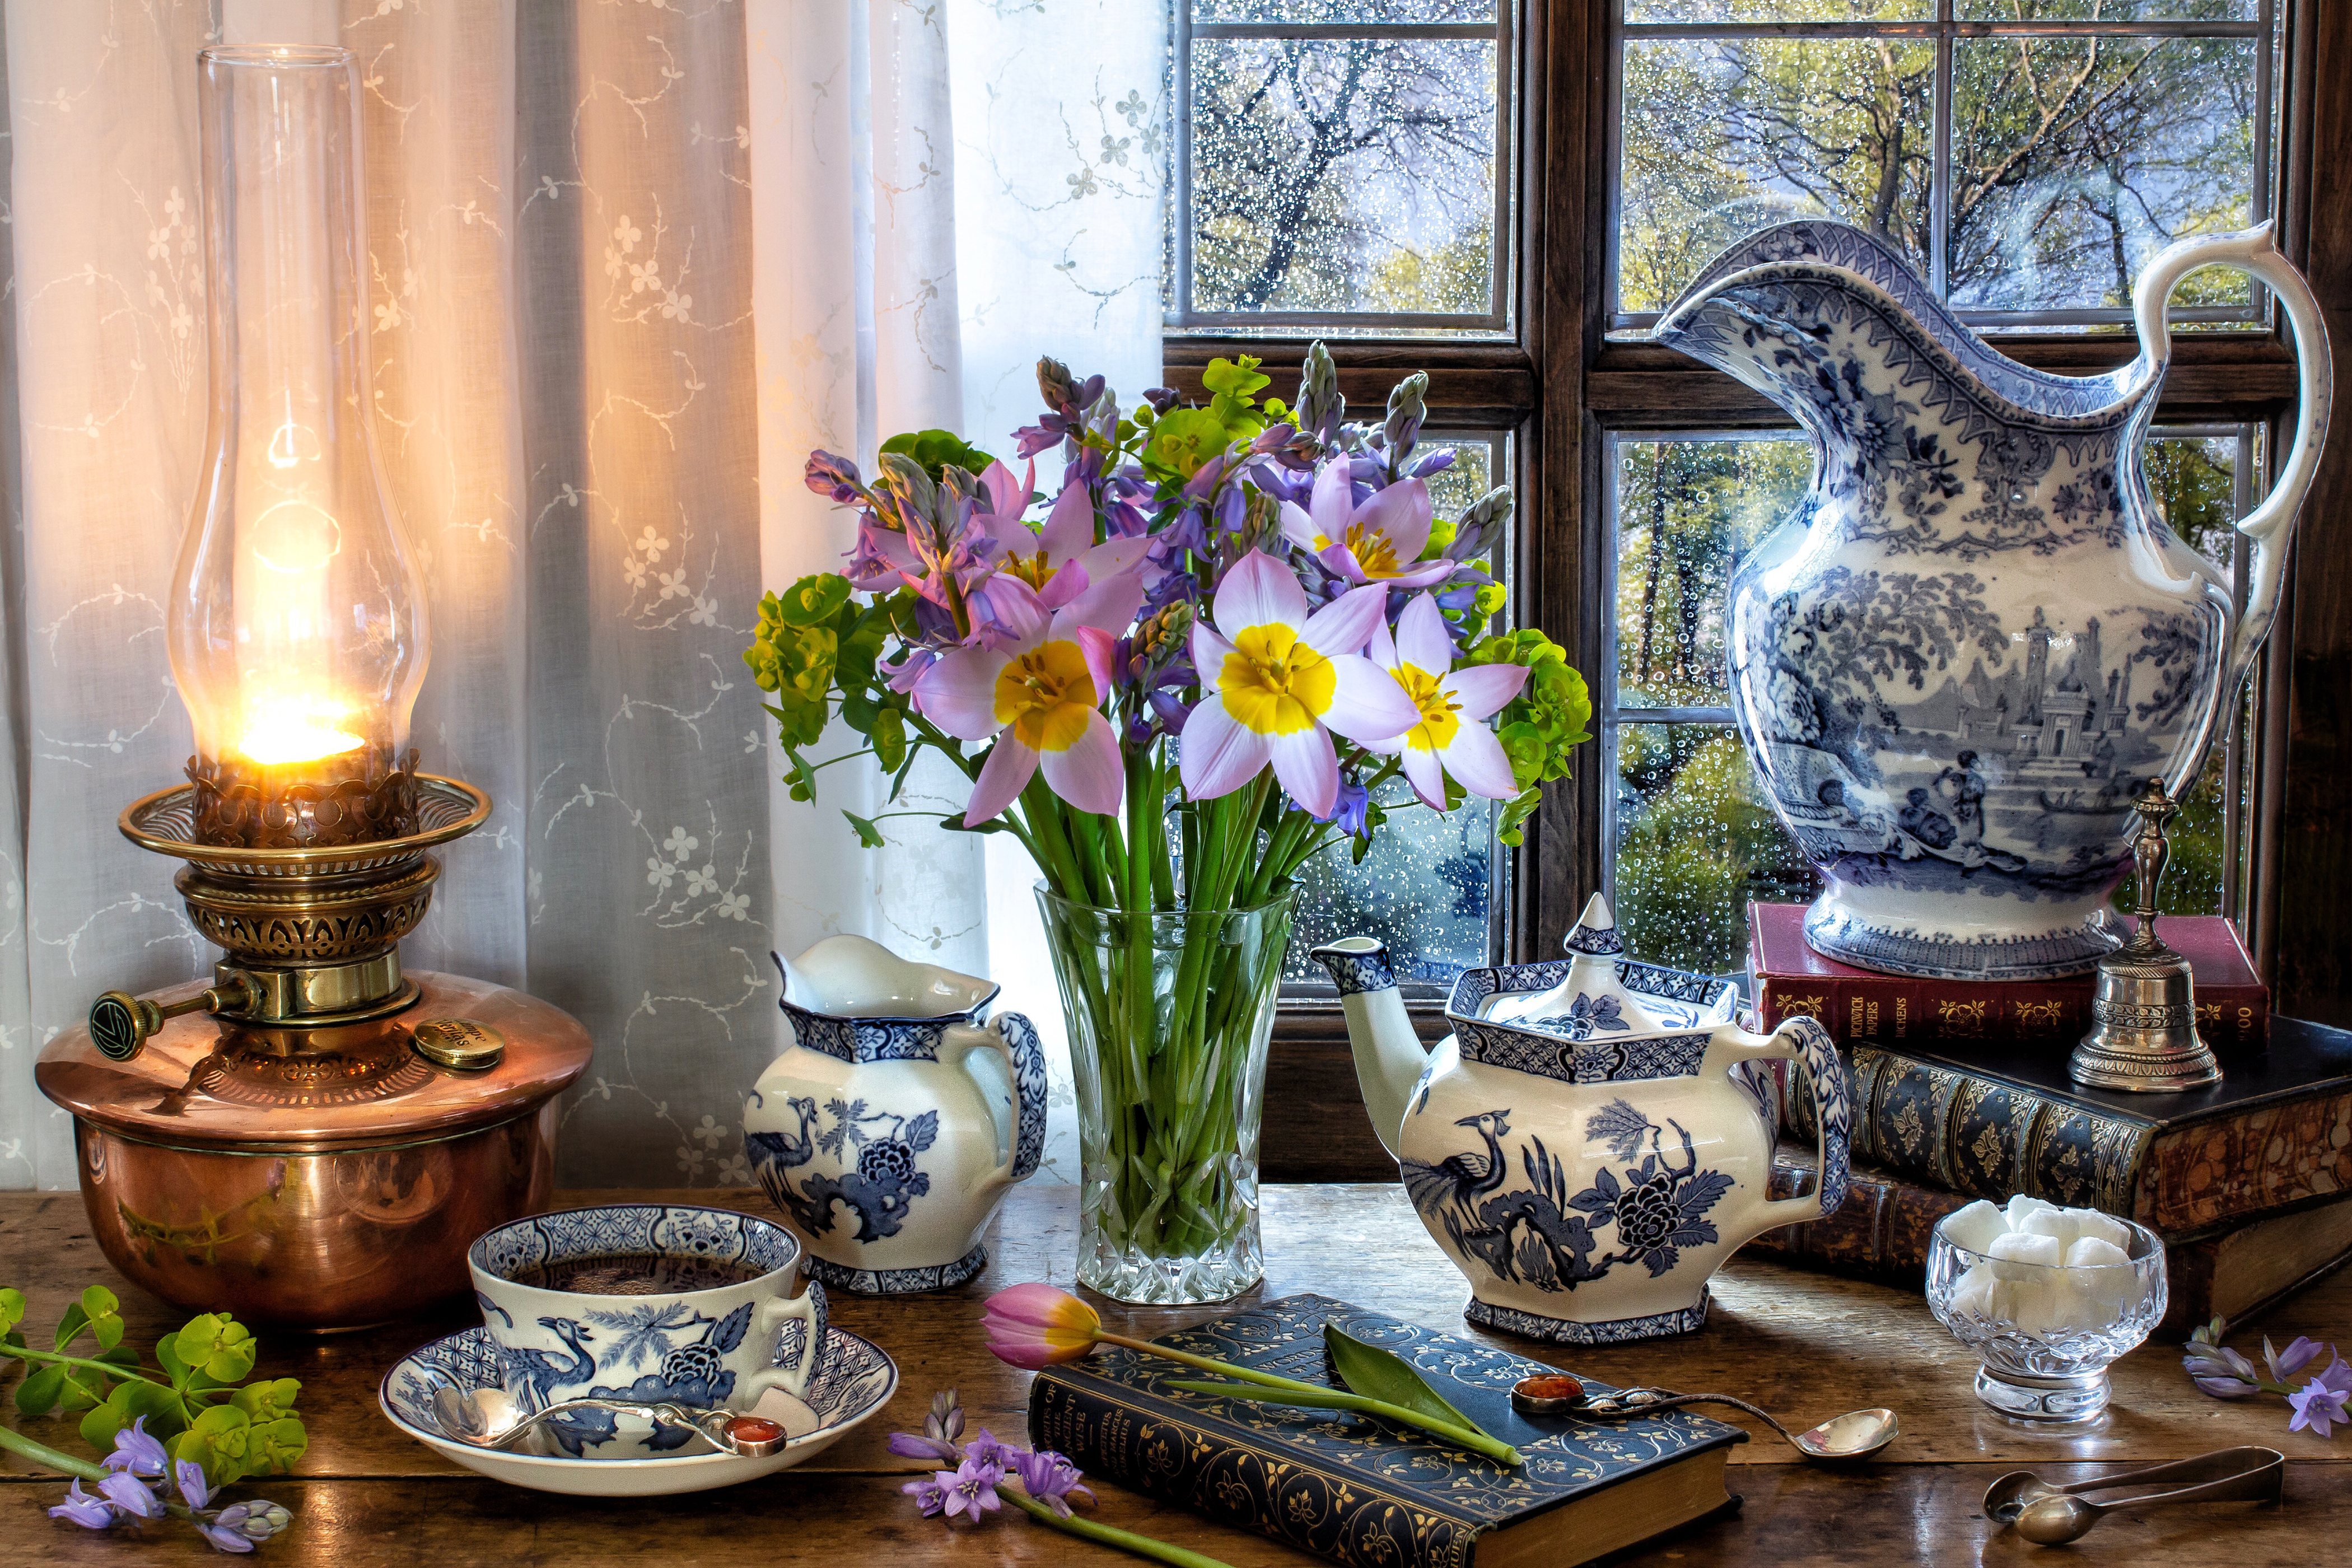 photography, still life, book, flower, kerosene lamp, teacup, teapot, vase, window